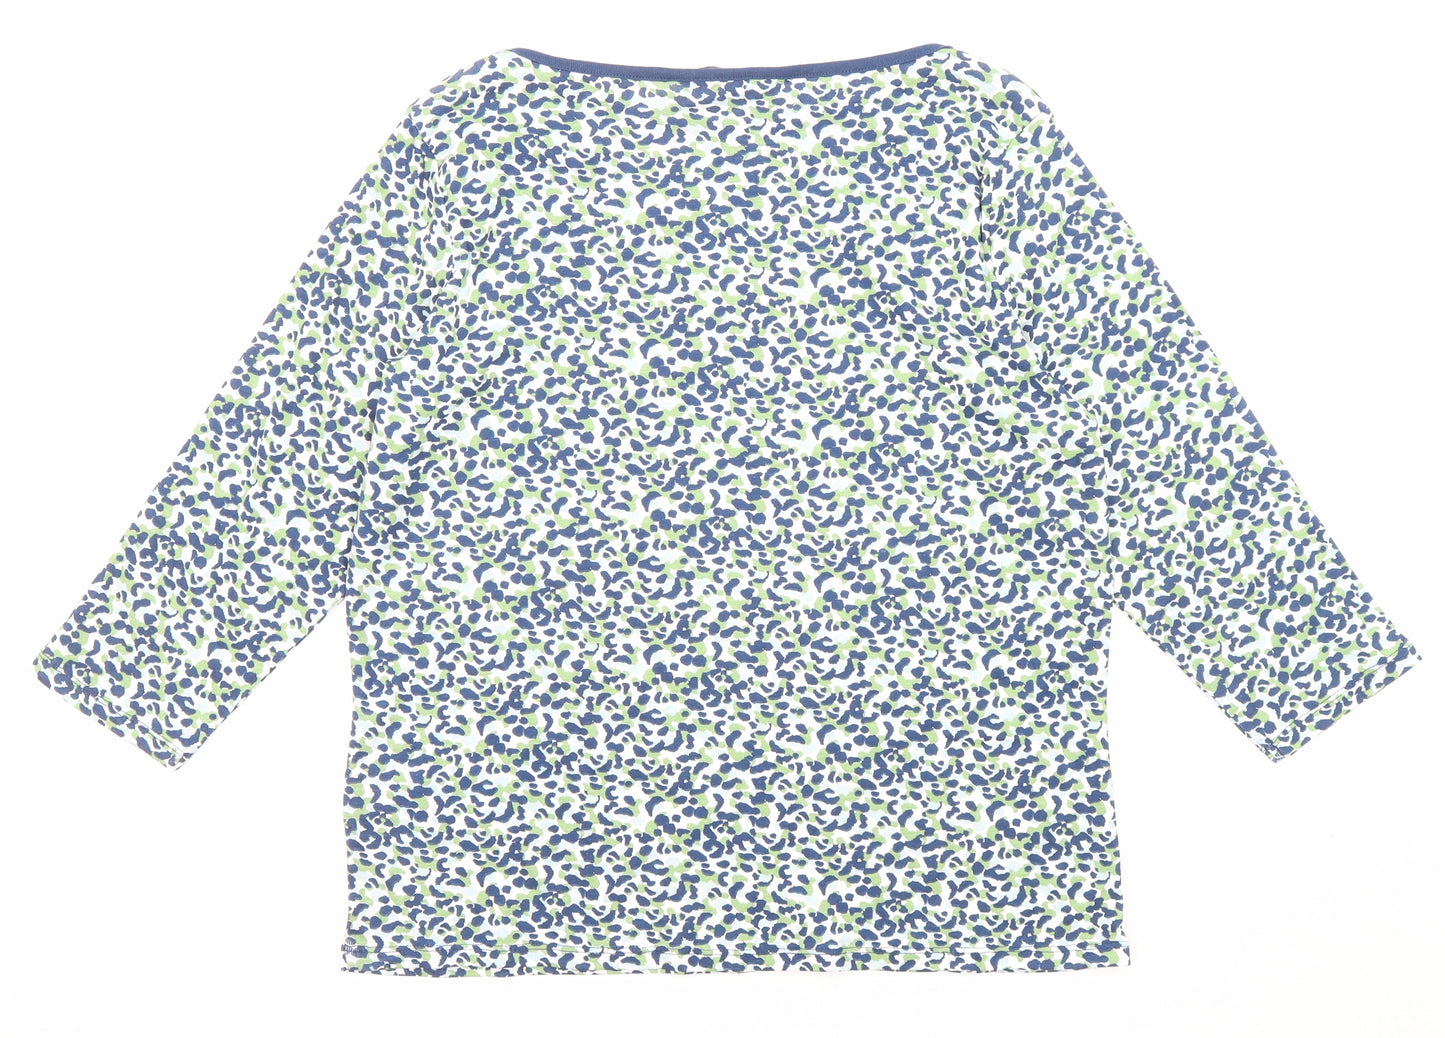 M&Co Womens Multicoloured Animal Print Cotton Basic T-Shirt Size 16 Boat Neck - Leopard Print